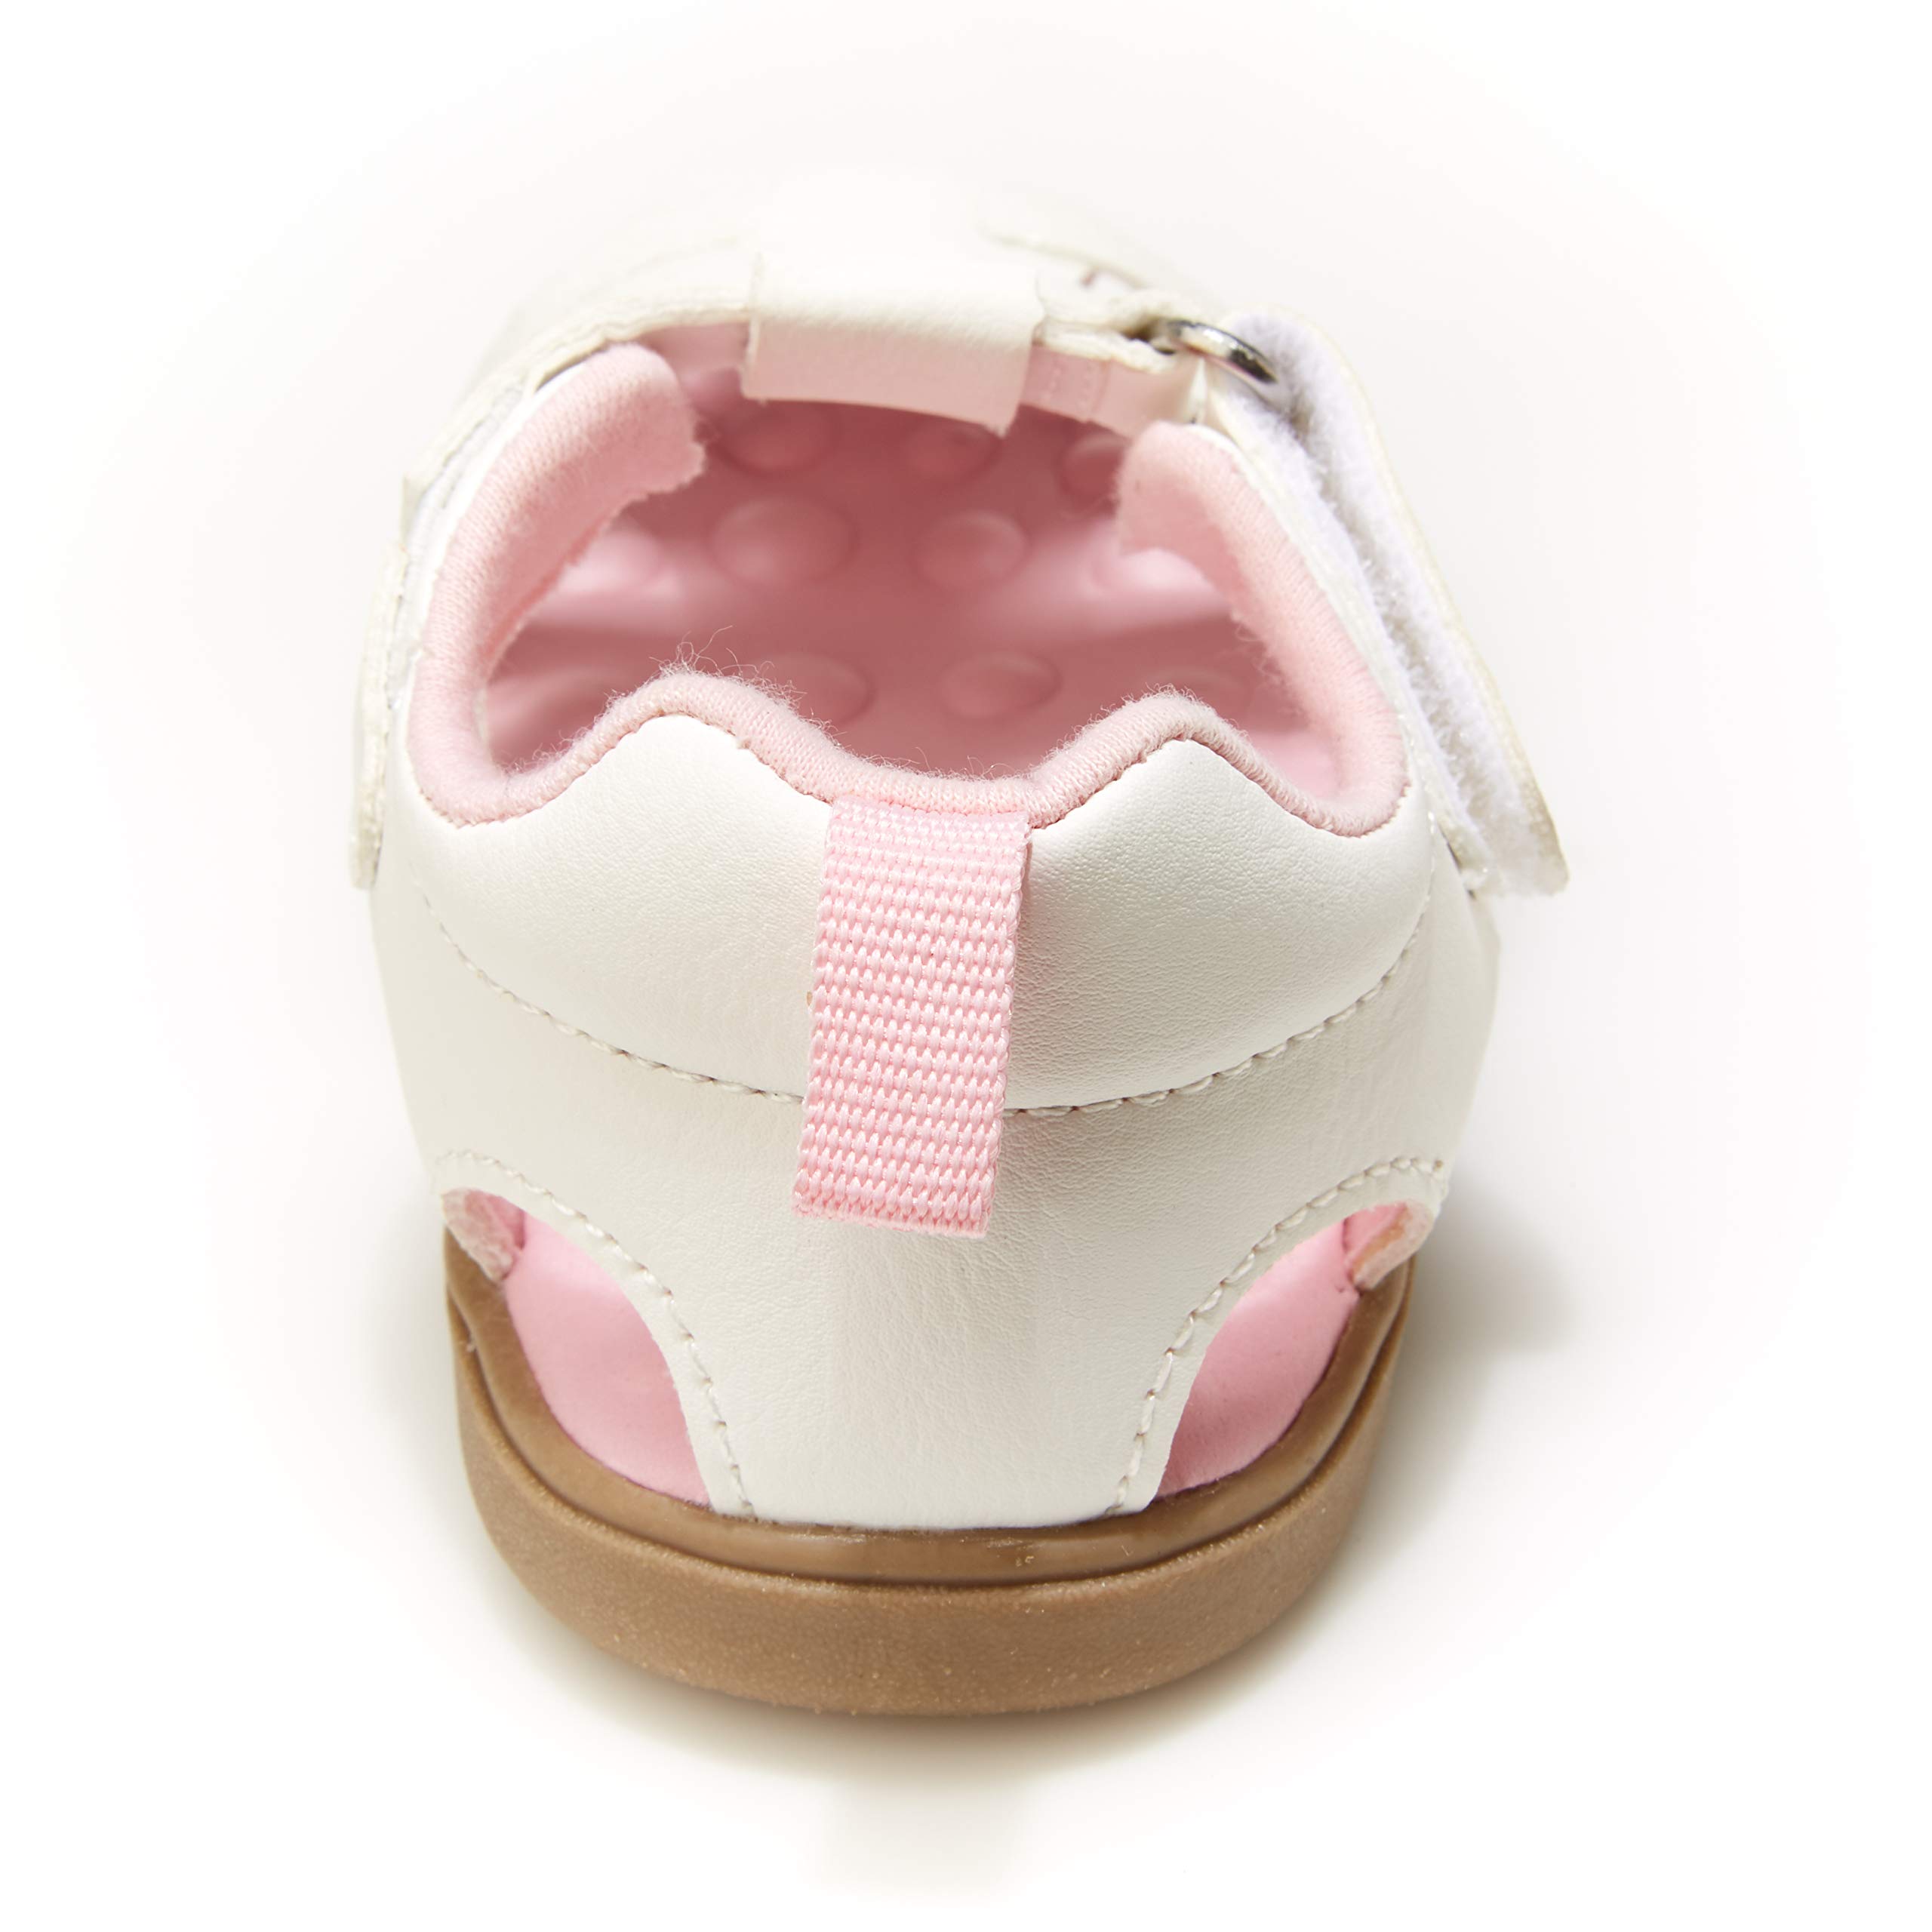 Carter's Unisex-Child Adalyn First Walker Shoe